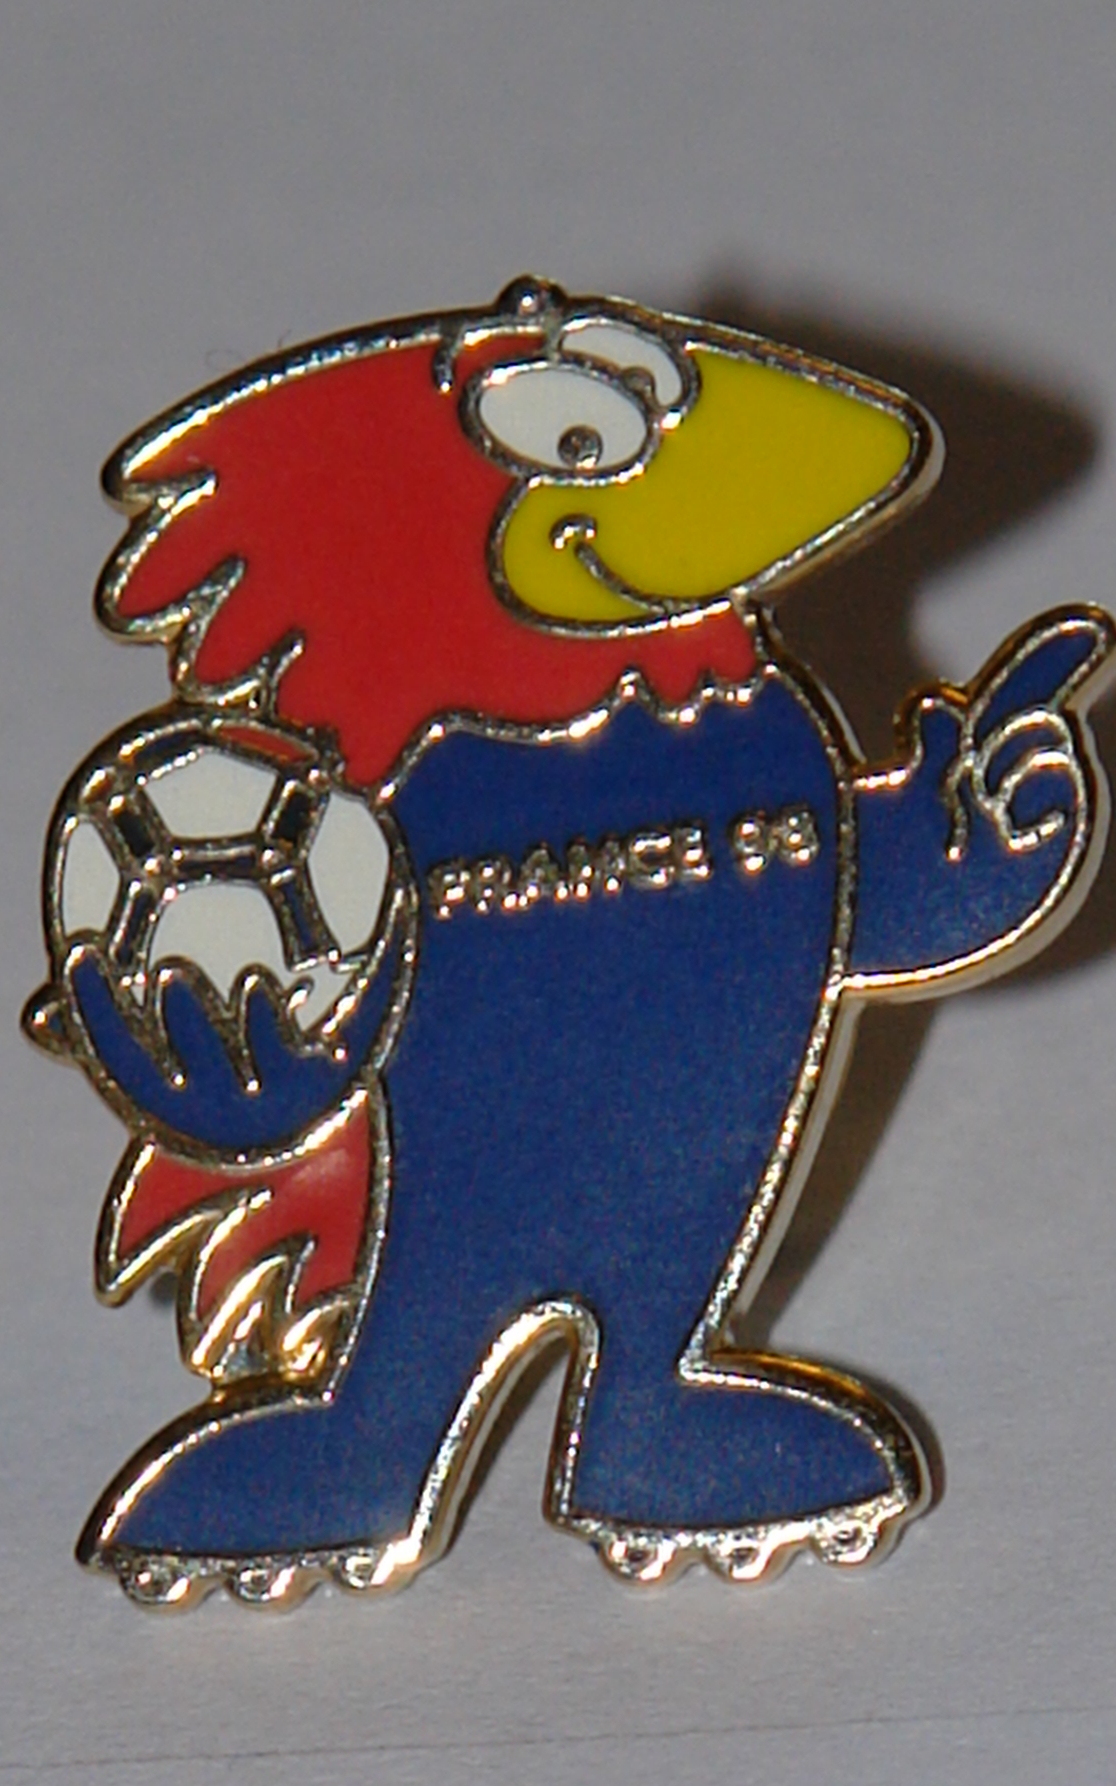 1998 world cup mascot